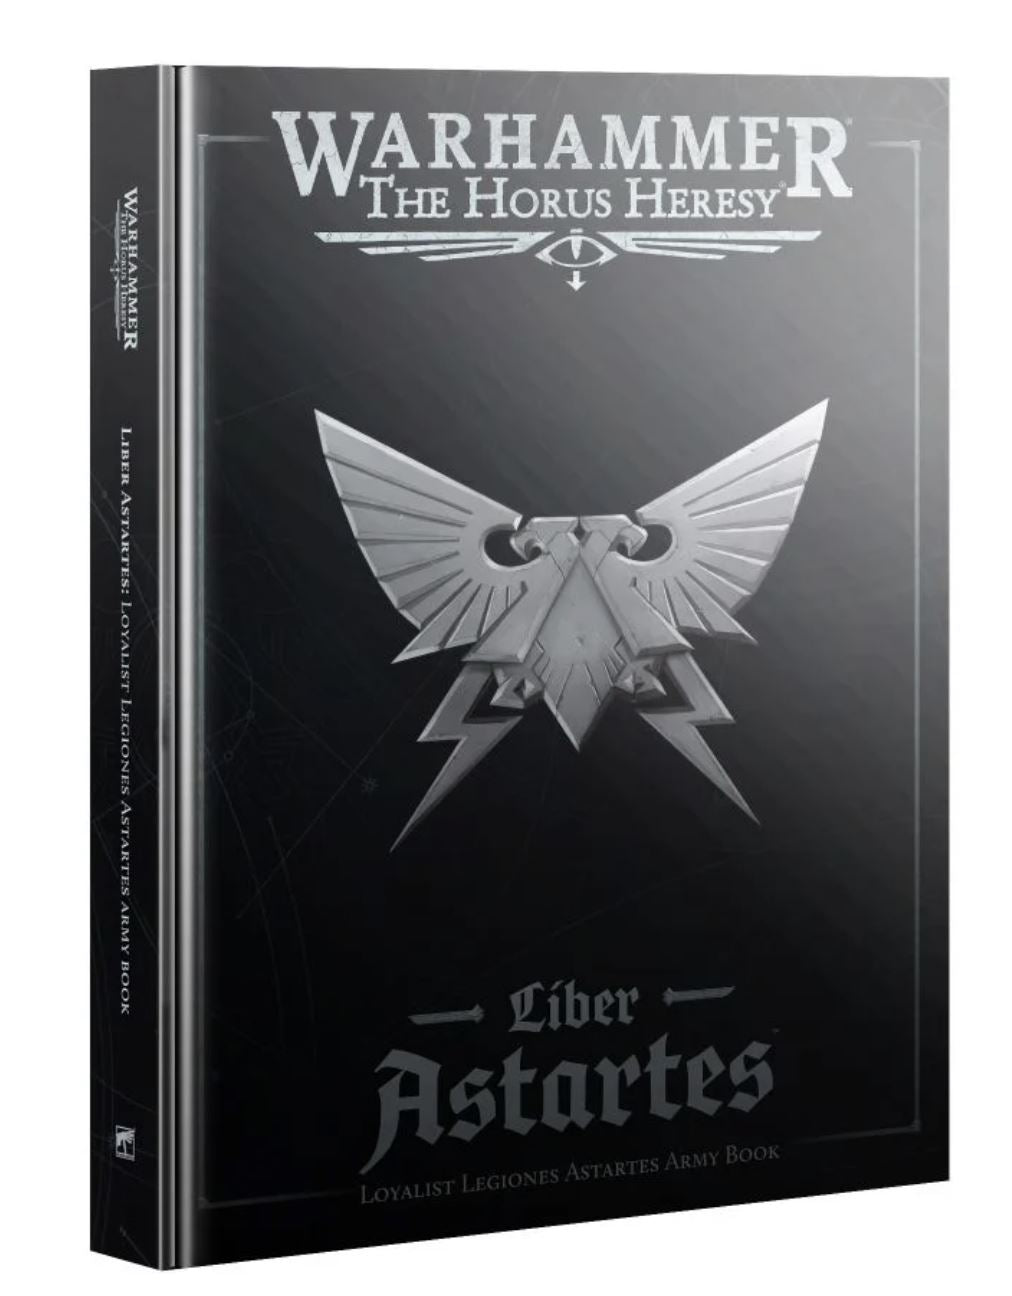 Horus Heresy - Liber Astartes – Loyalist Legiones Astartes Army Book